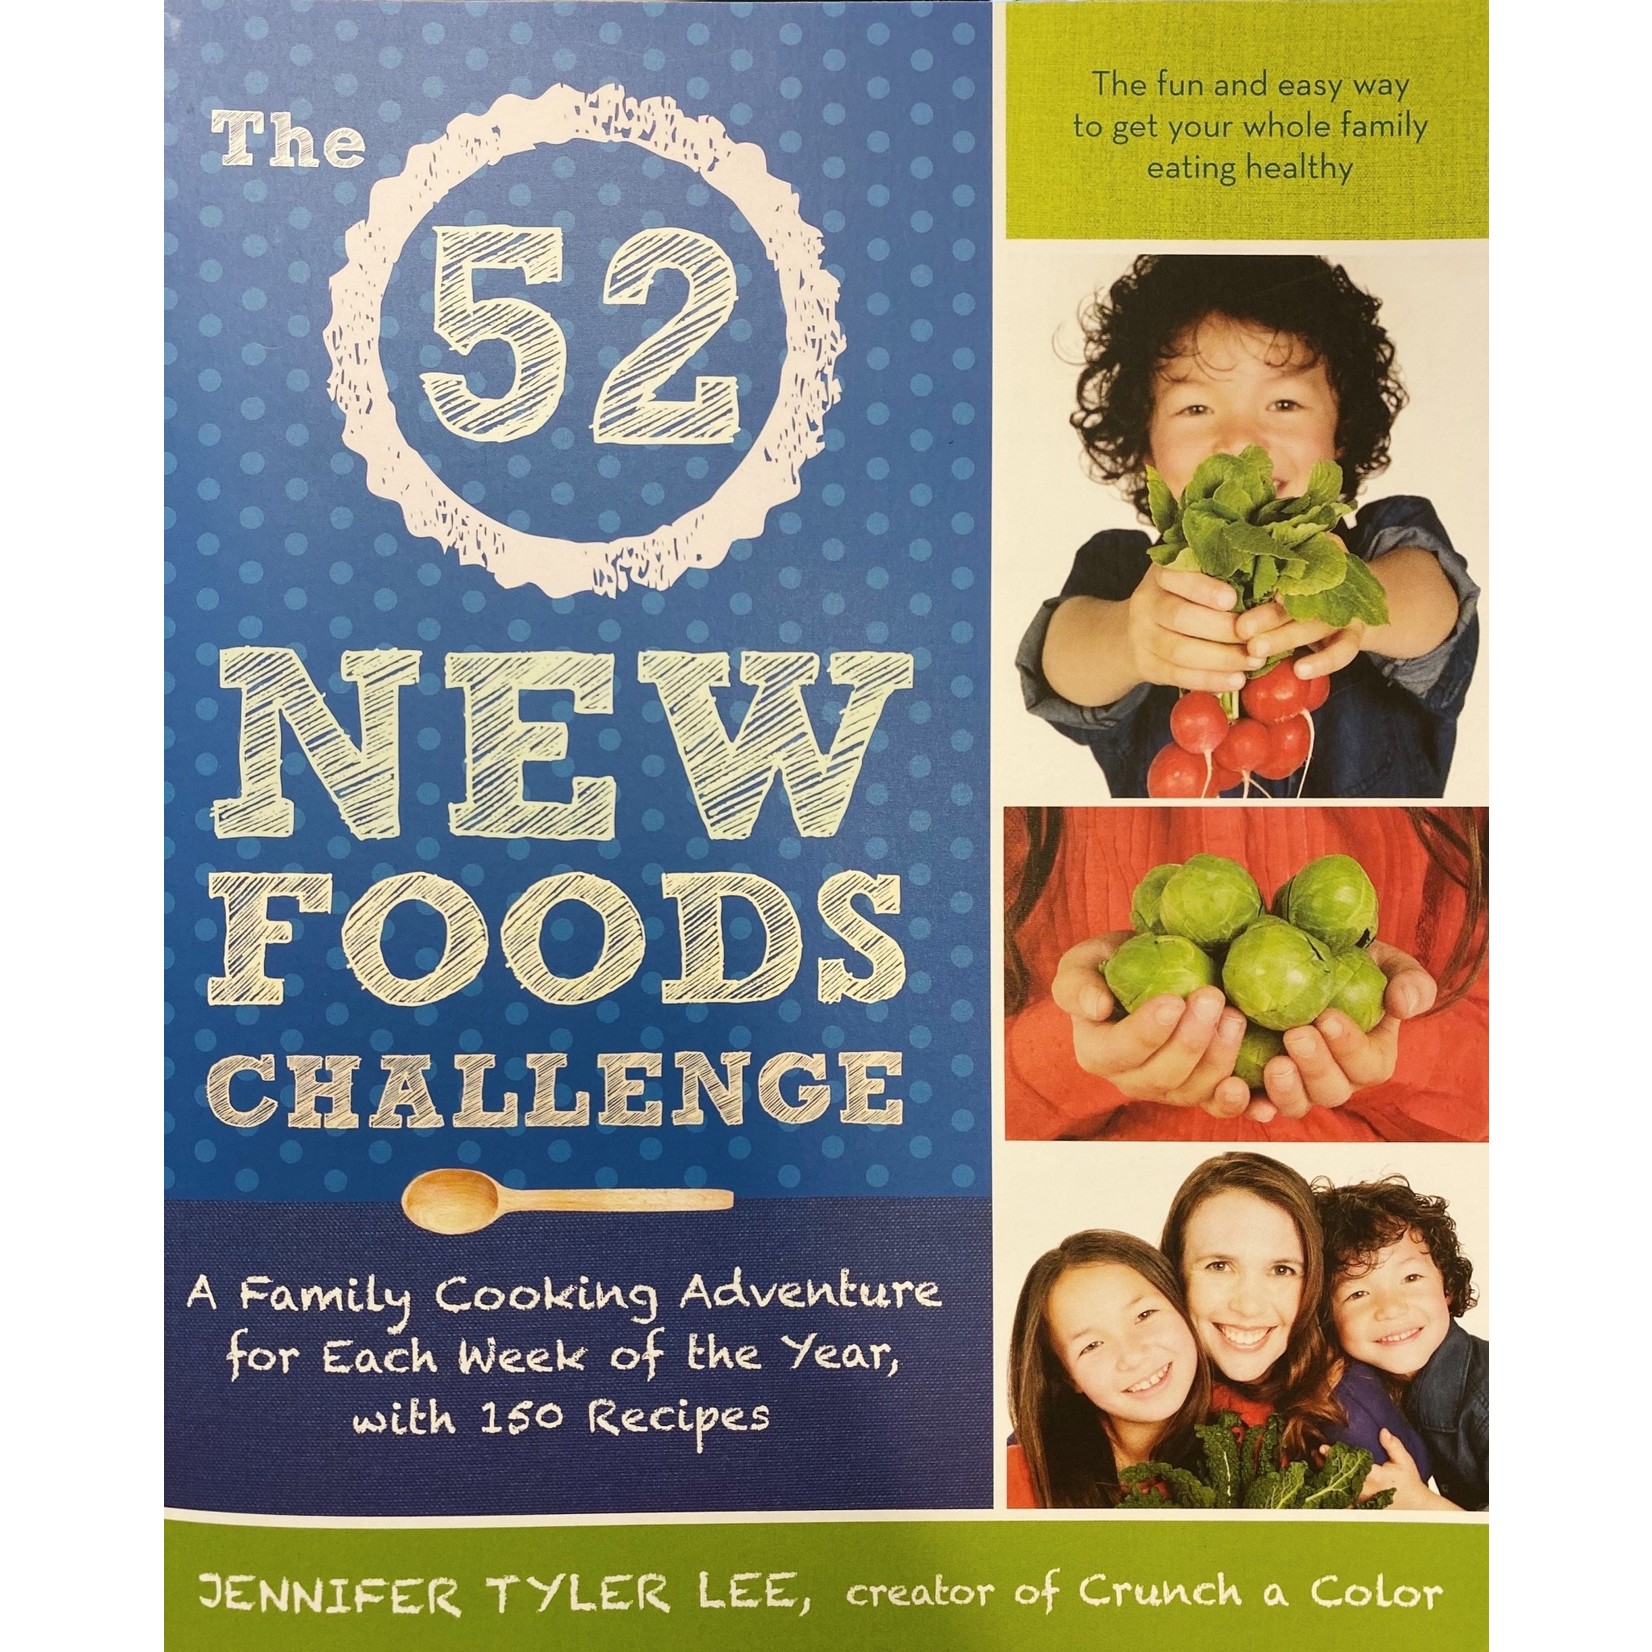 Penguin Random House 52 New Foods Challenge